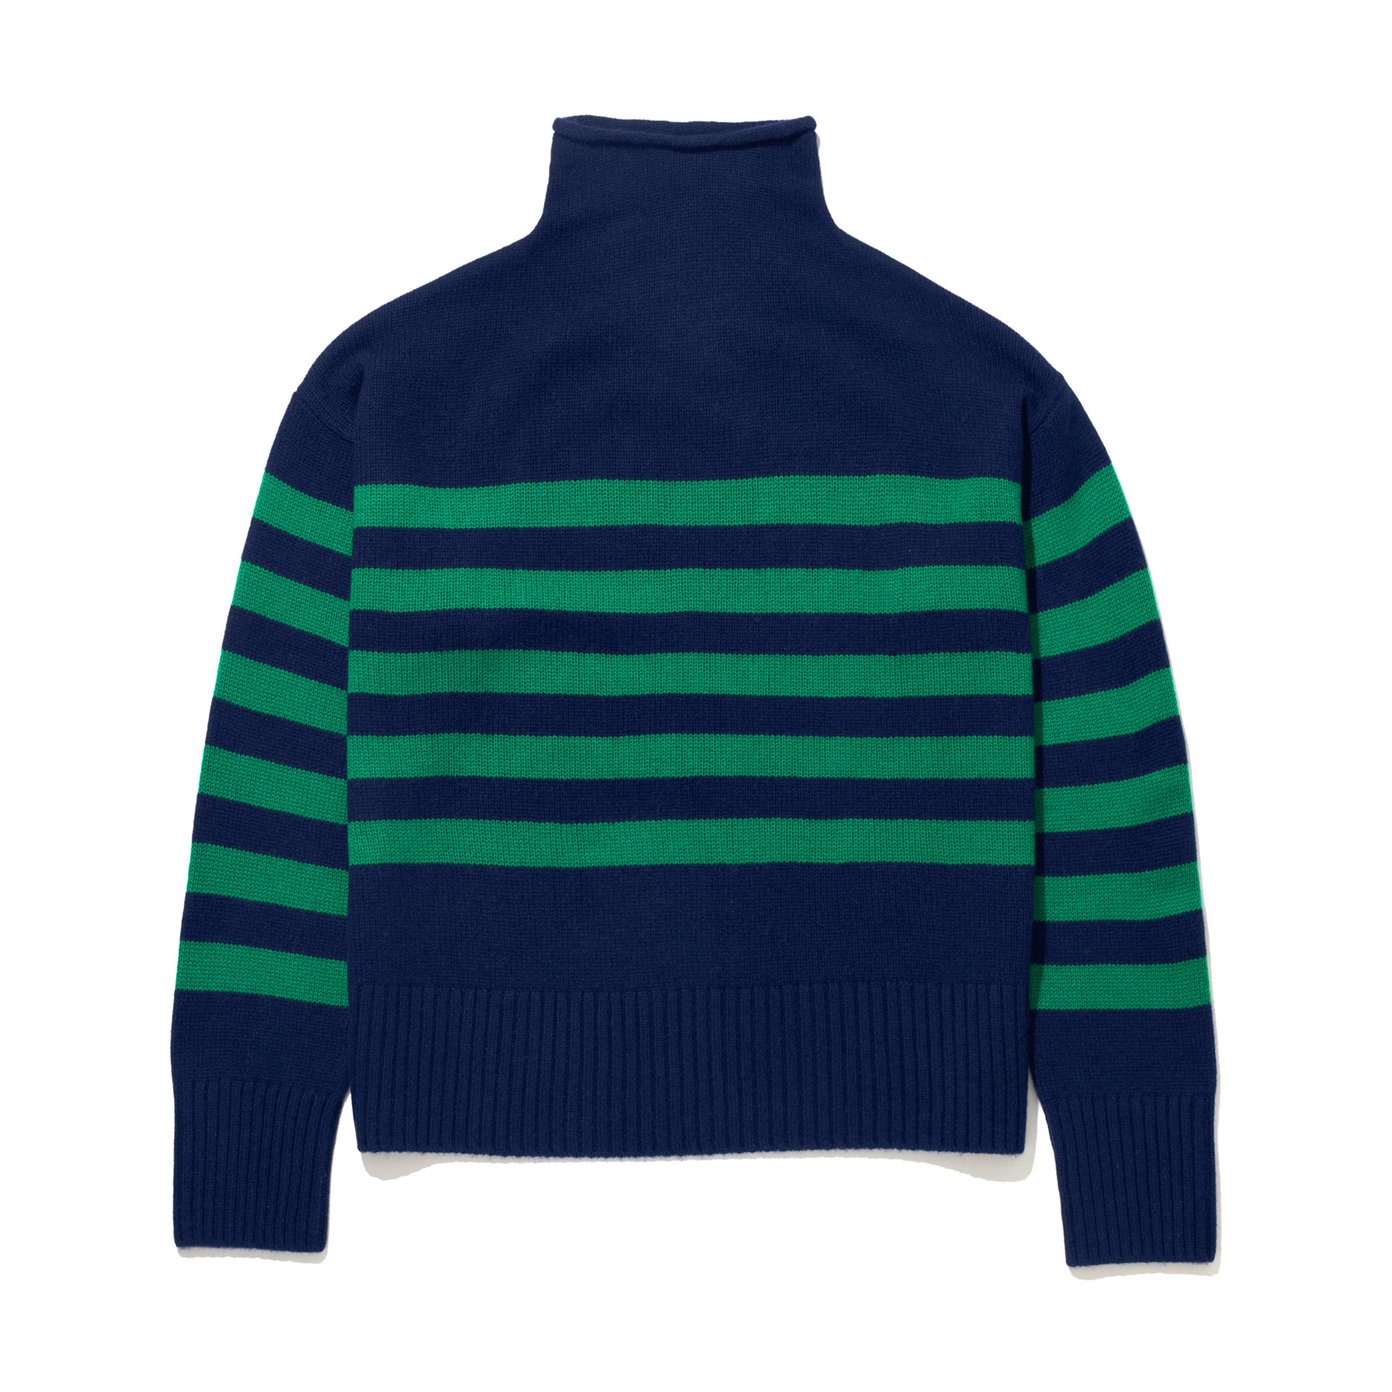 KULE The Lucca Sweater | goop